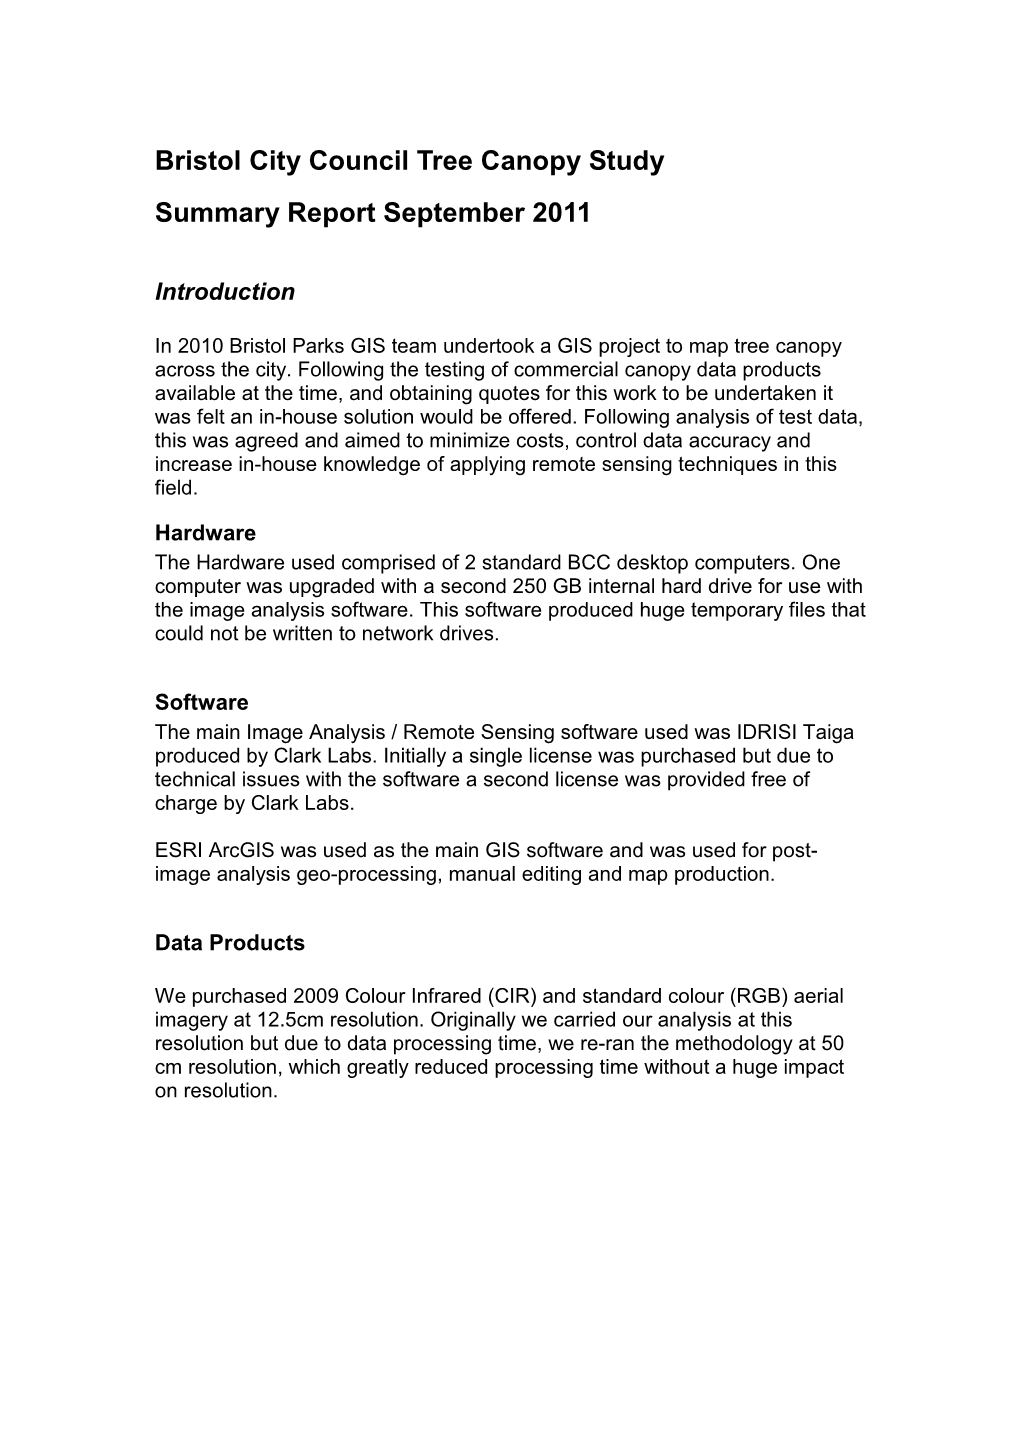 Bristol City Council Tree Canopy Study Summary Report September 2011